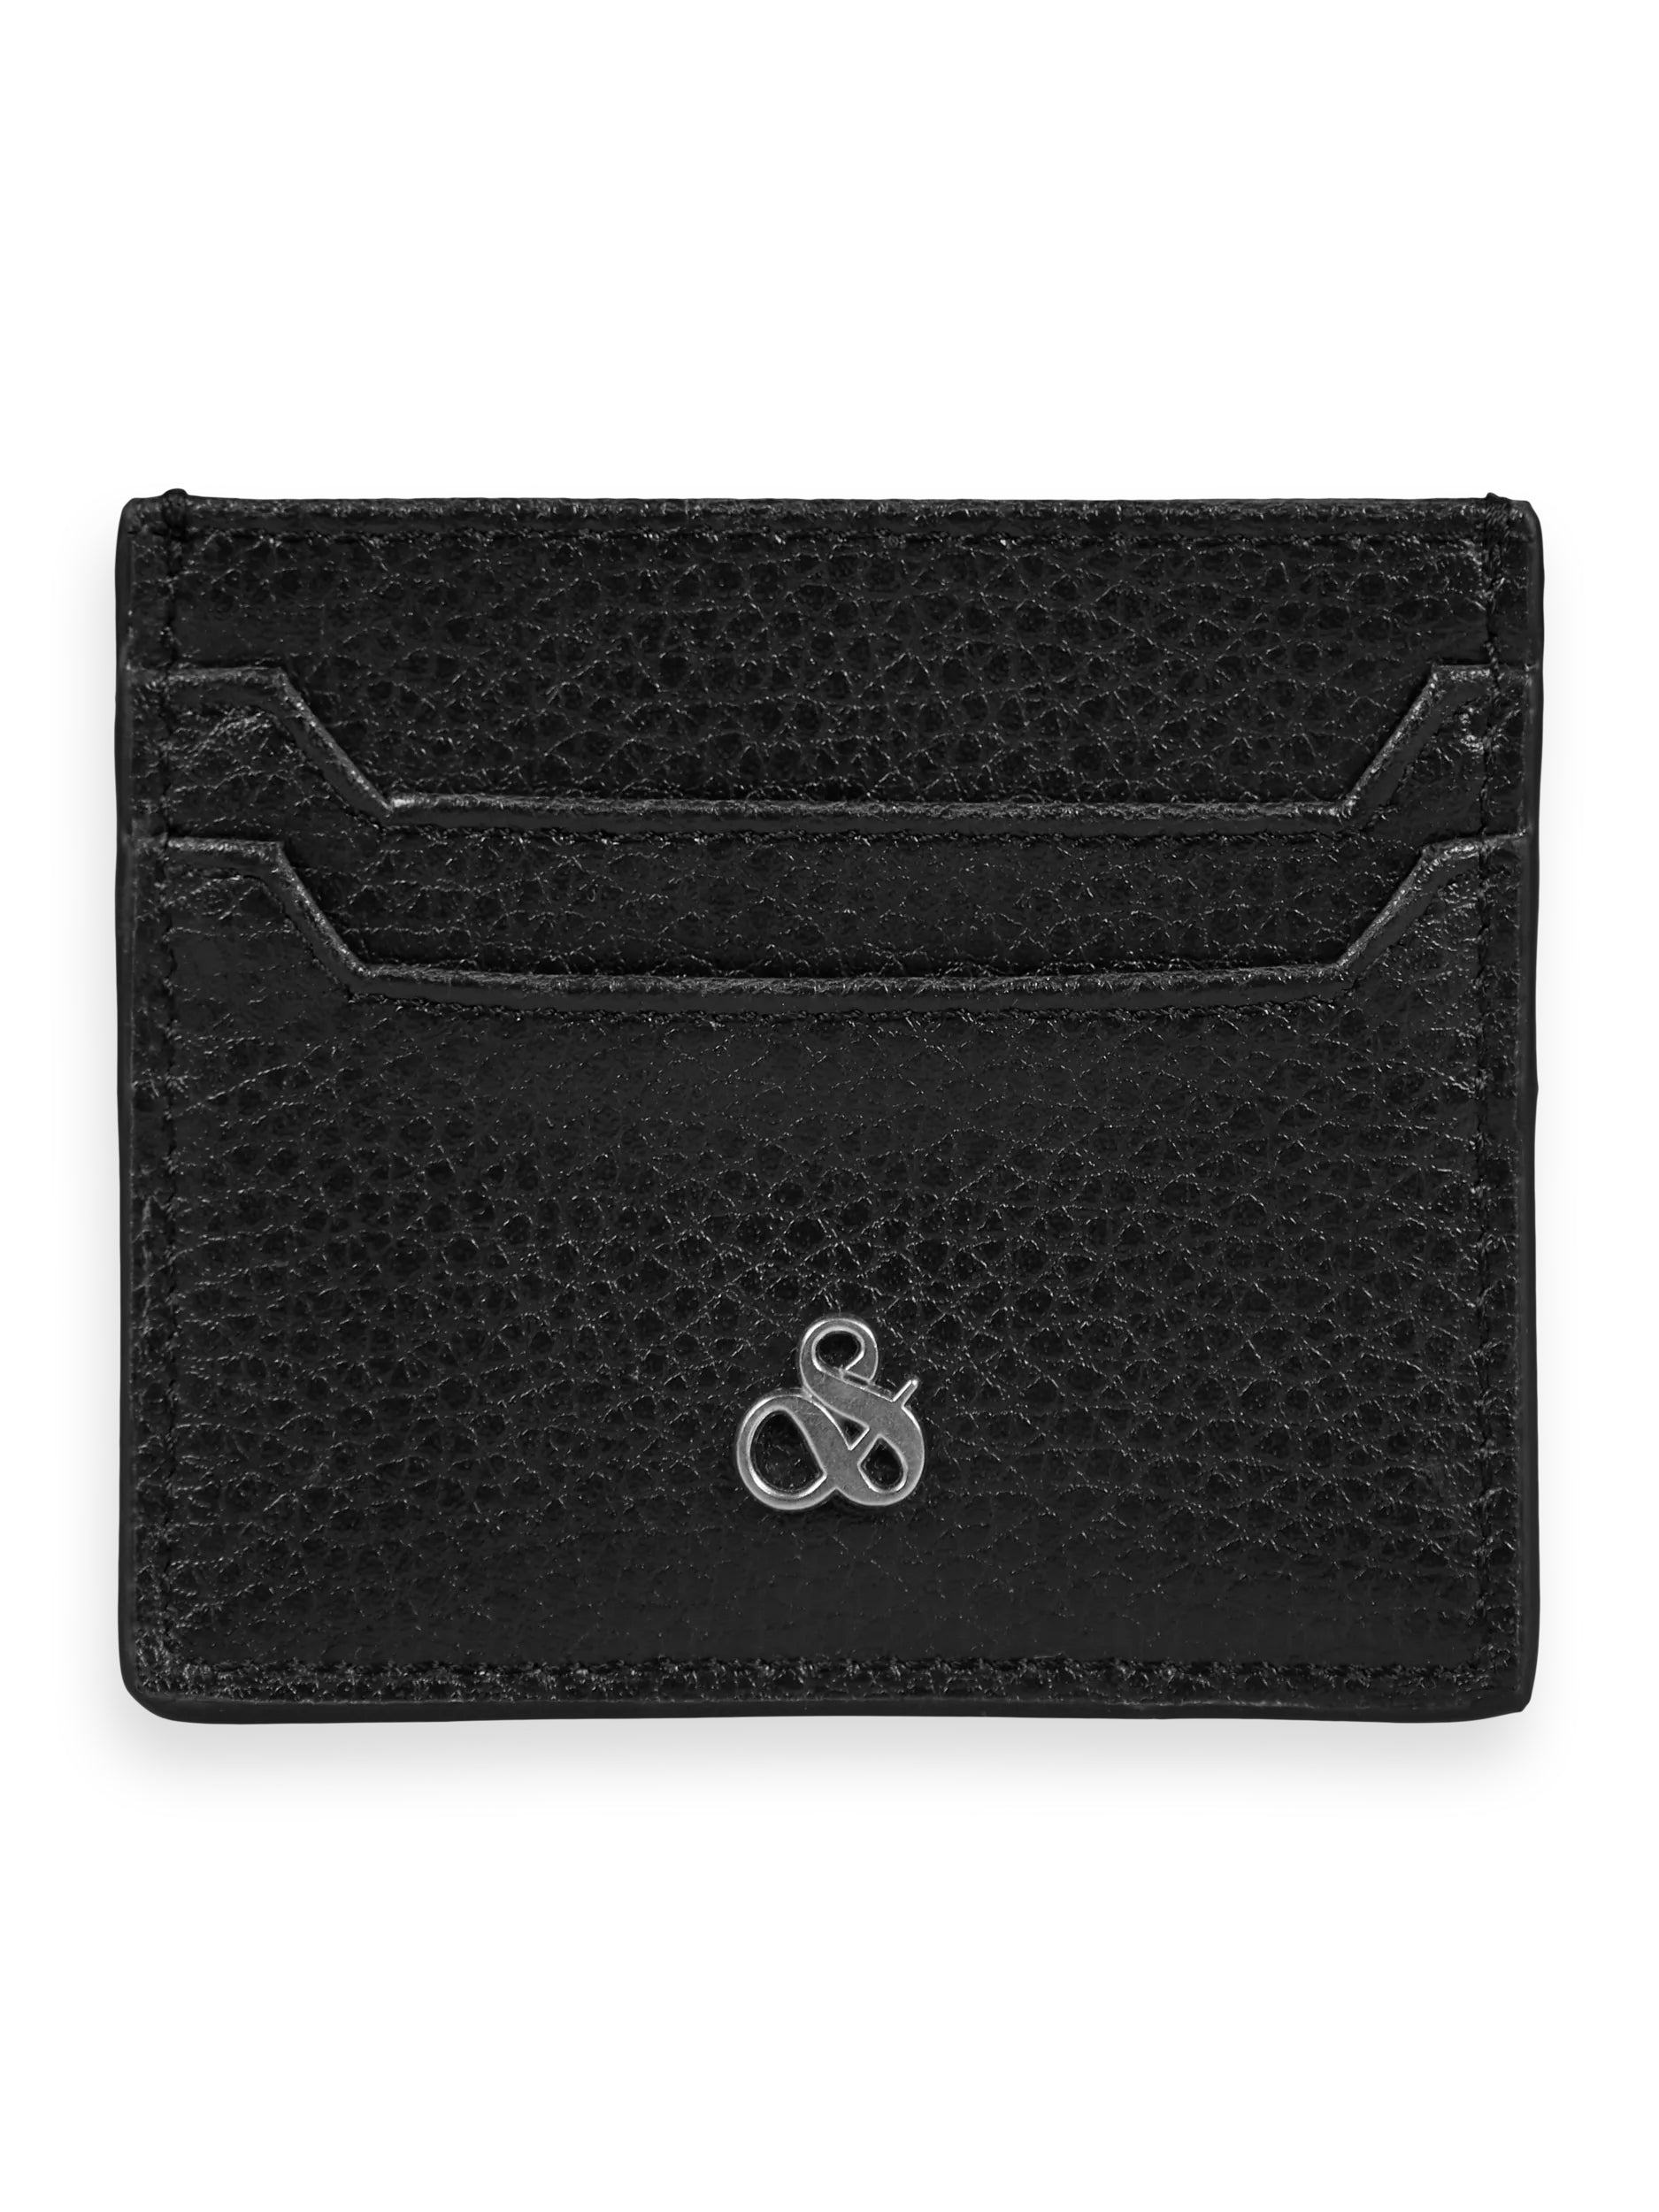 Maison Scotch - MIRUM Leather Cardholder - Black